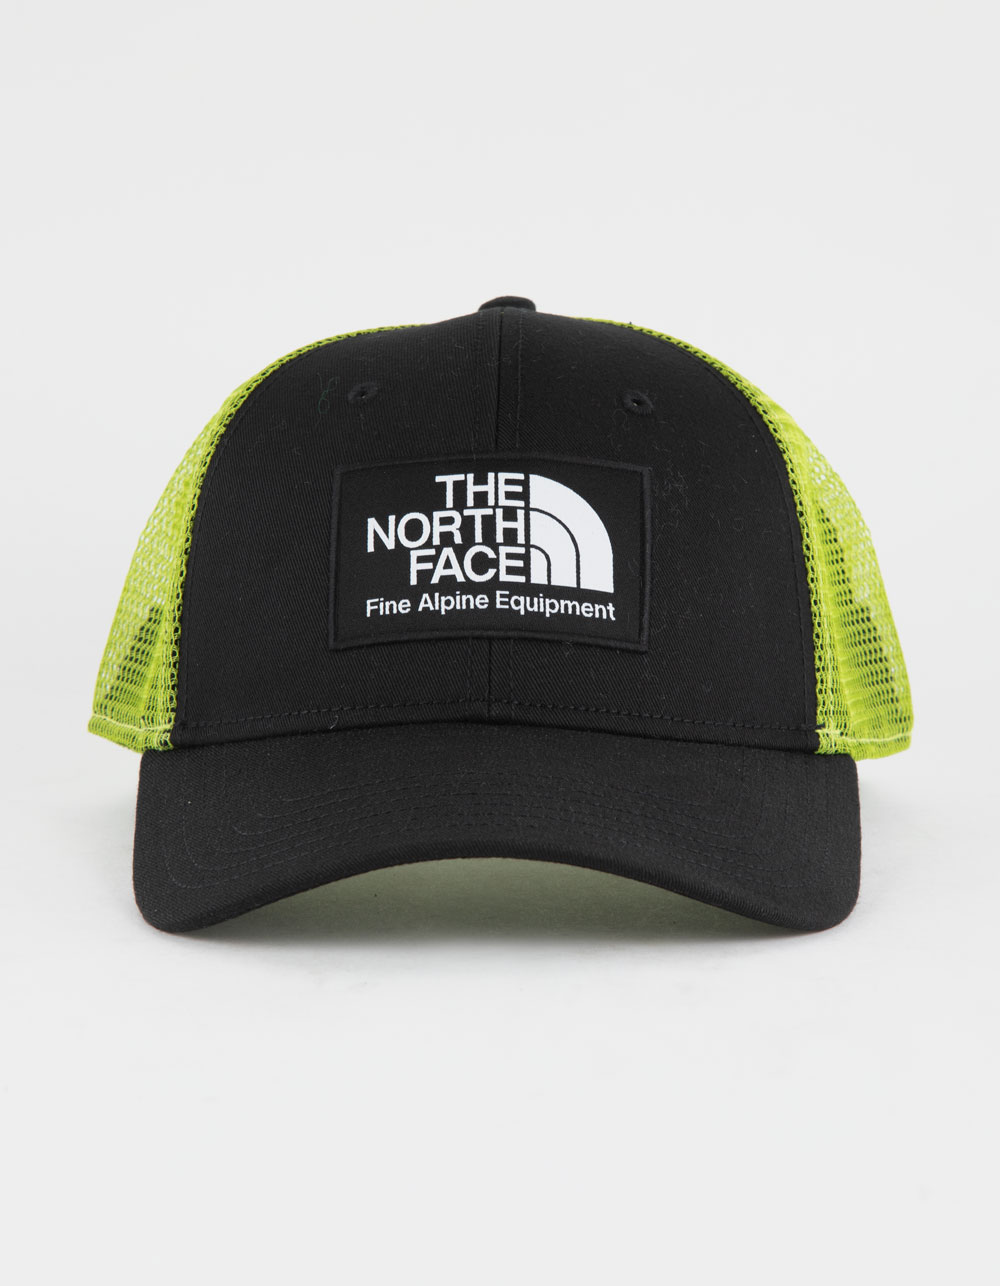 THE NORTH FACE Mudder Mens Trucker Hat